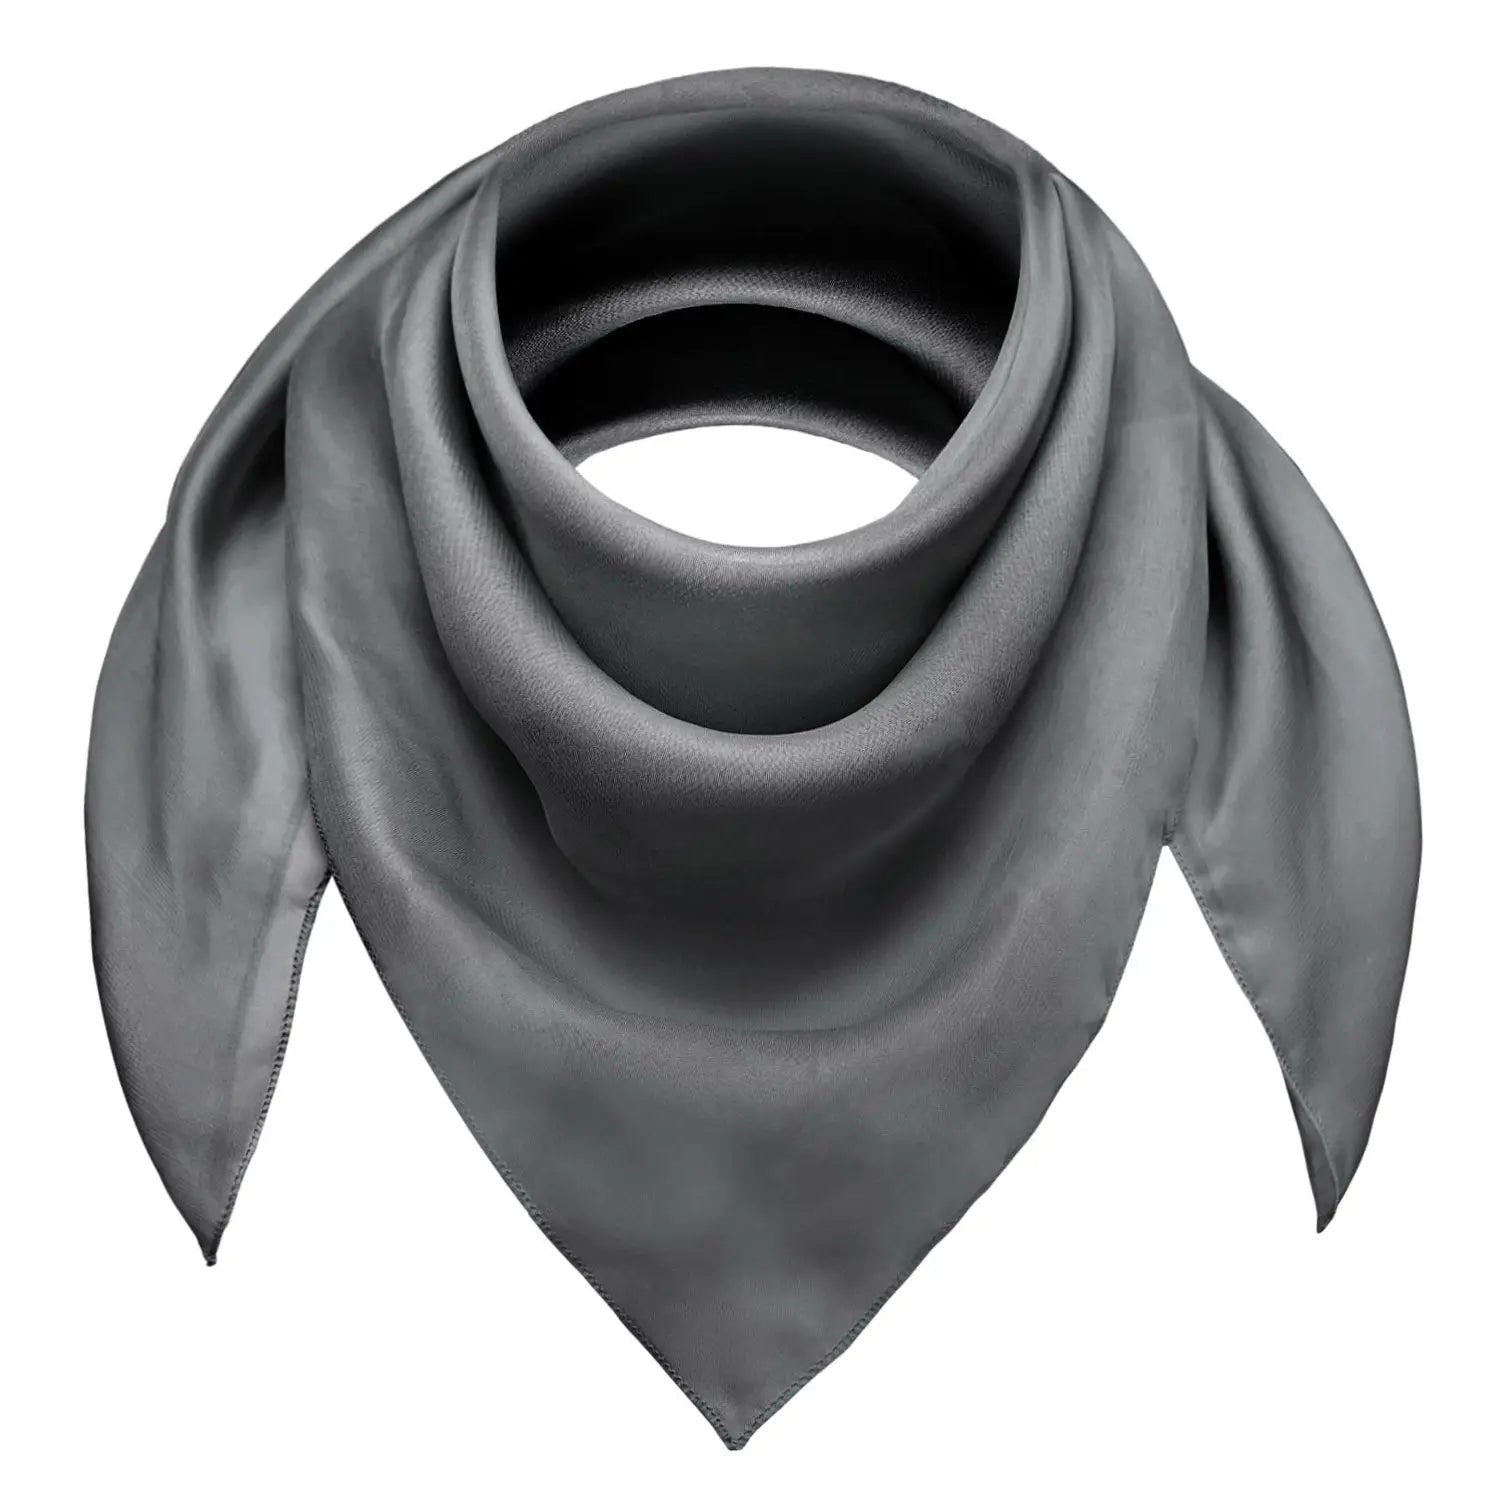 Chiffon square scarf on white background - Lightweight chiffon women’s scarf